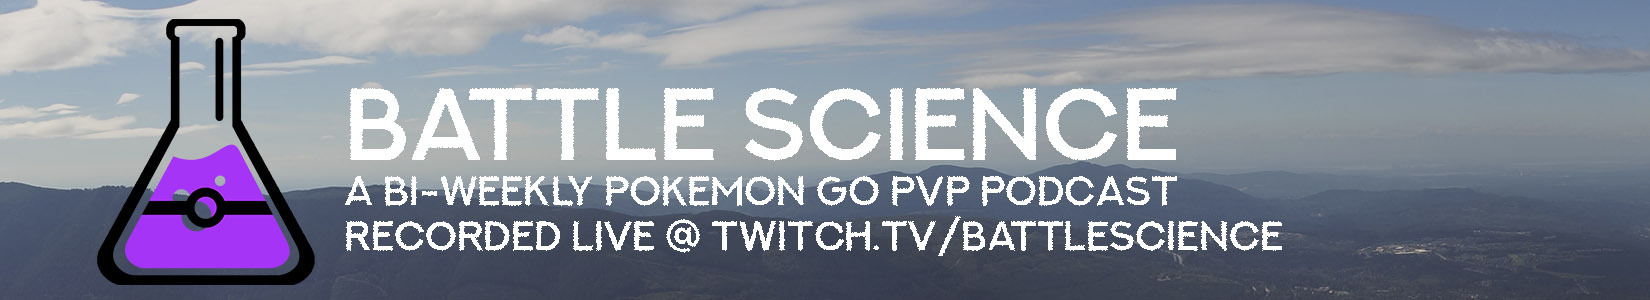 Battle Science Podcast: a Pokemon Go PvP Podcast header image 1